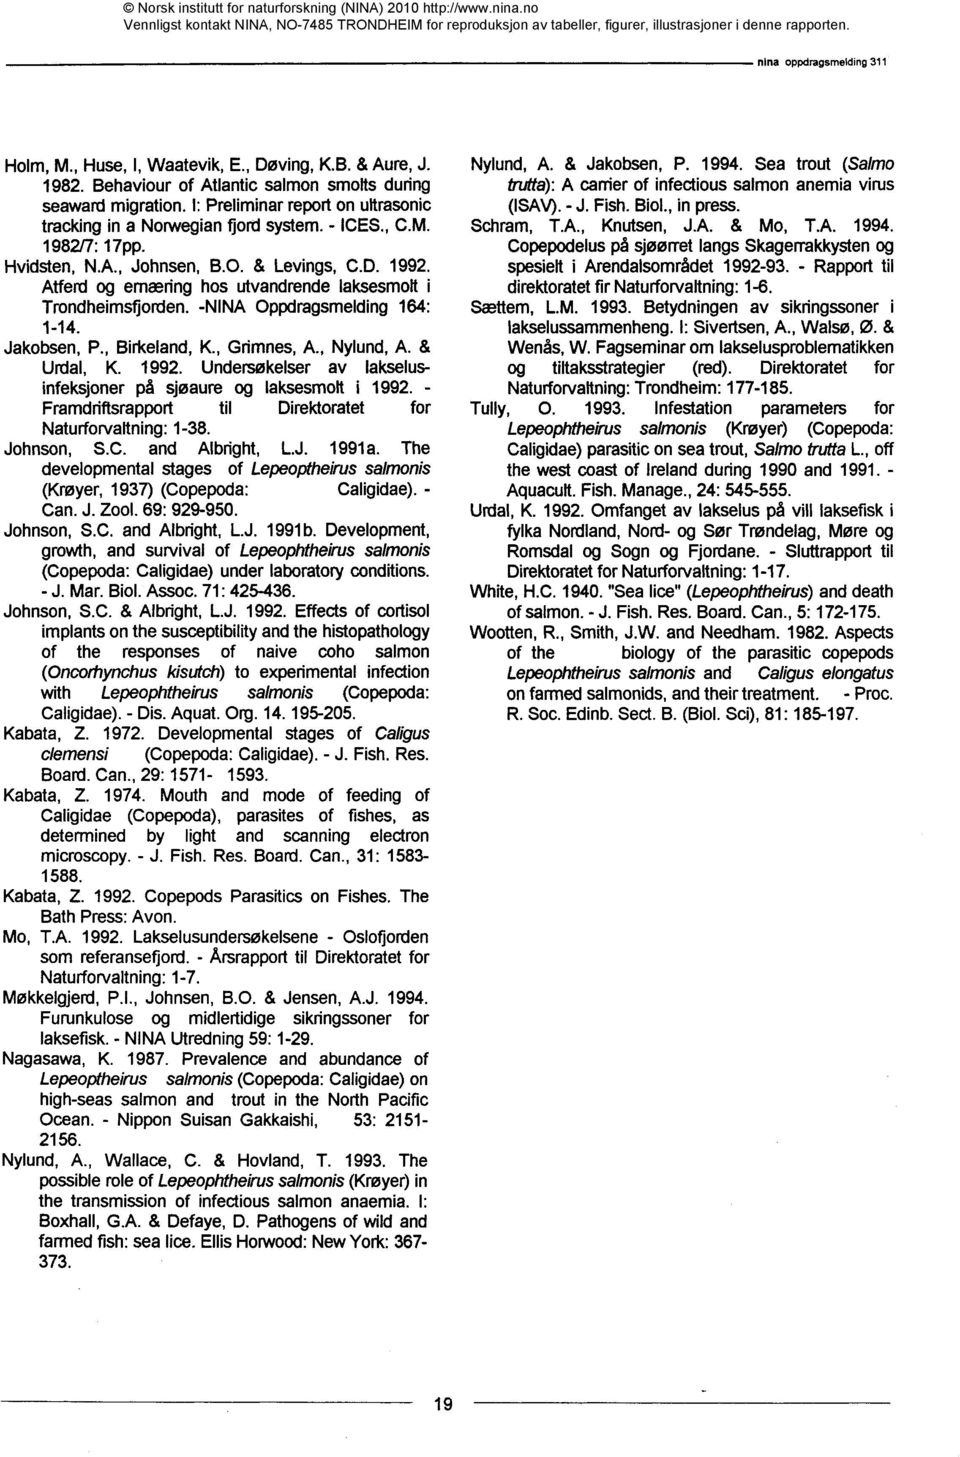 , Birkeland, K., Grimnes, A., Nylund, A. & Urdal, K. 1992. Undersøkelser av lakselusinfeksjoner på sjøaure og laksesmolt i 1992. - Framdriftsrapport til Direktoratet for Natufforvaltning: 1-38.